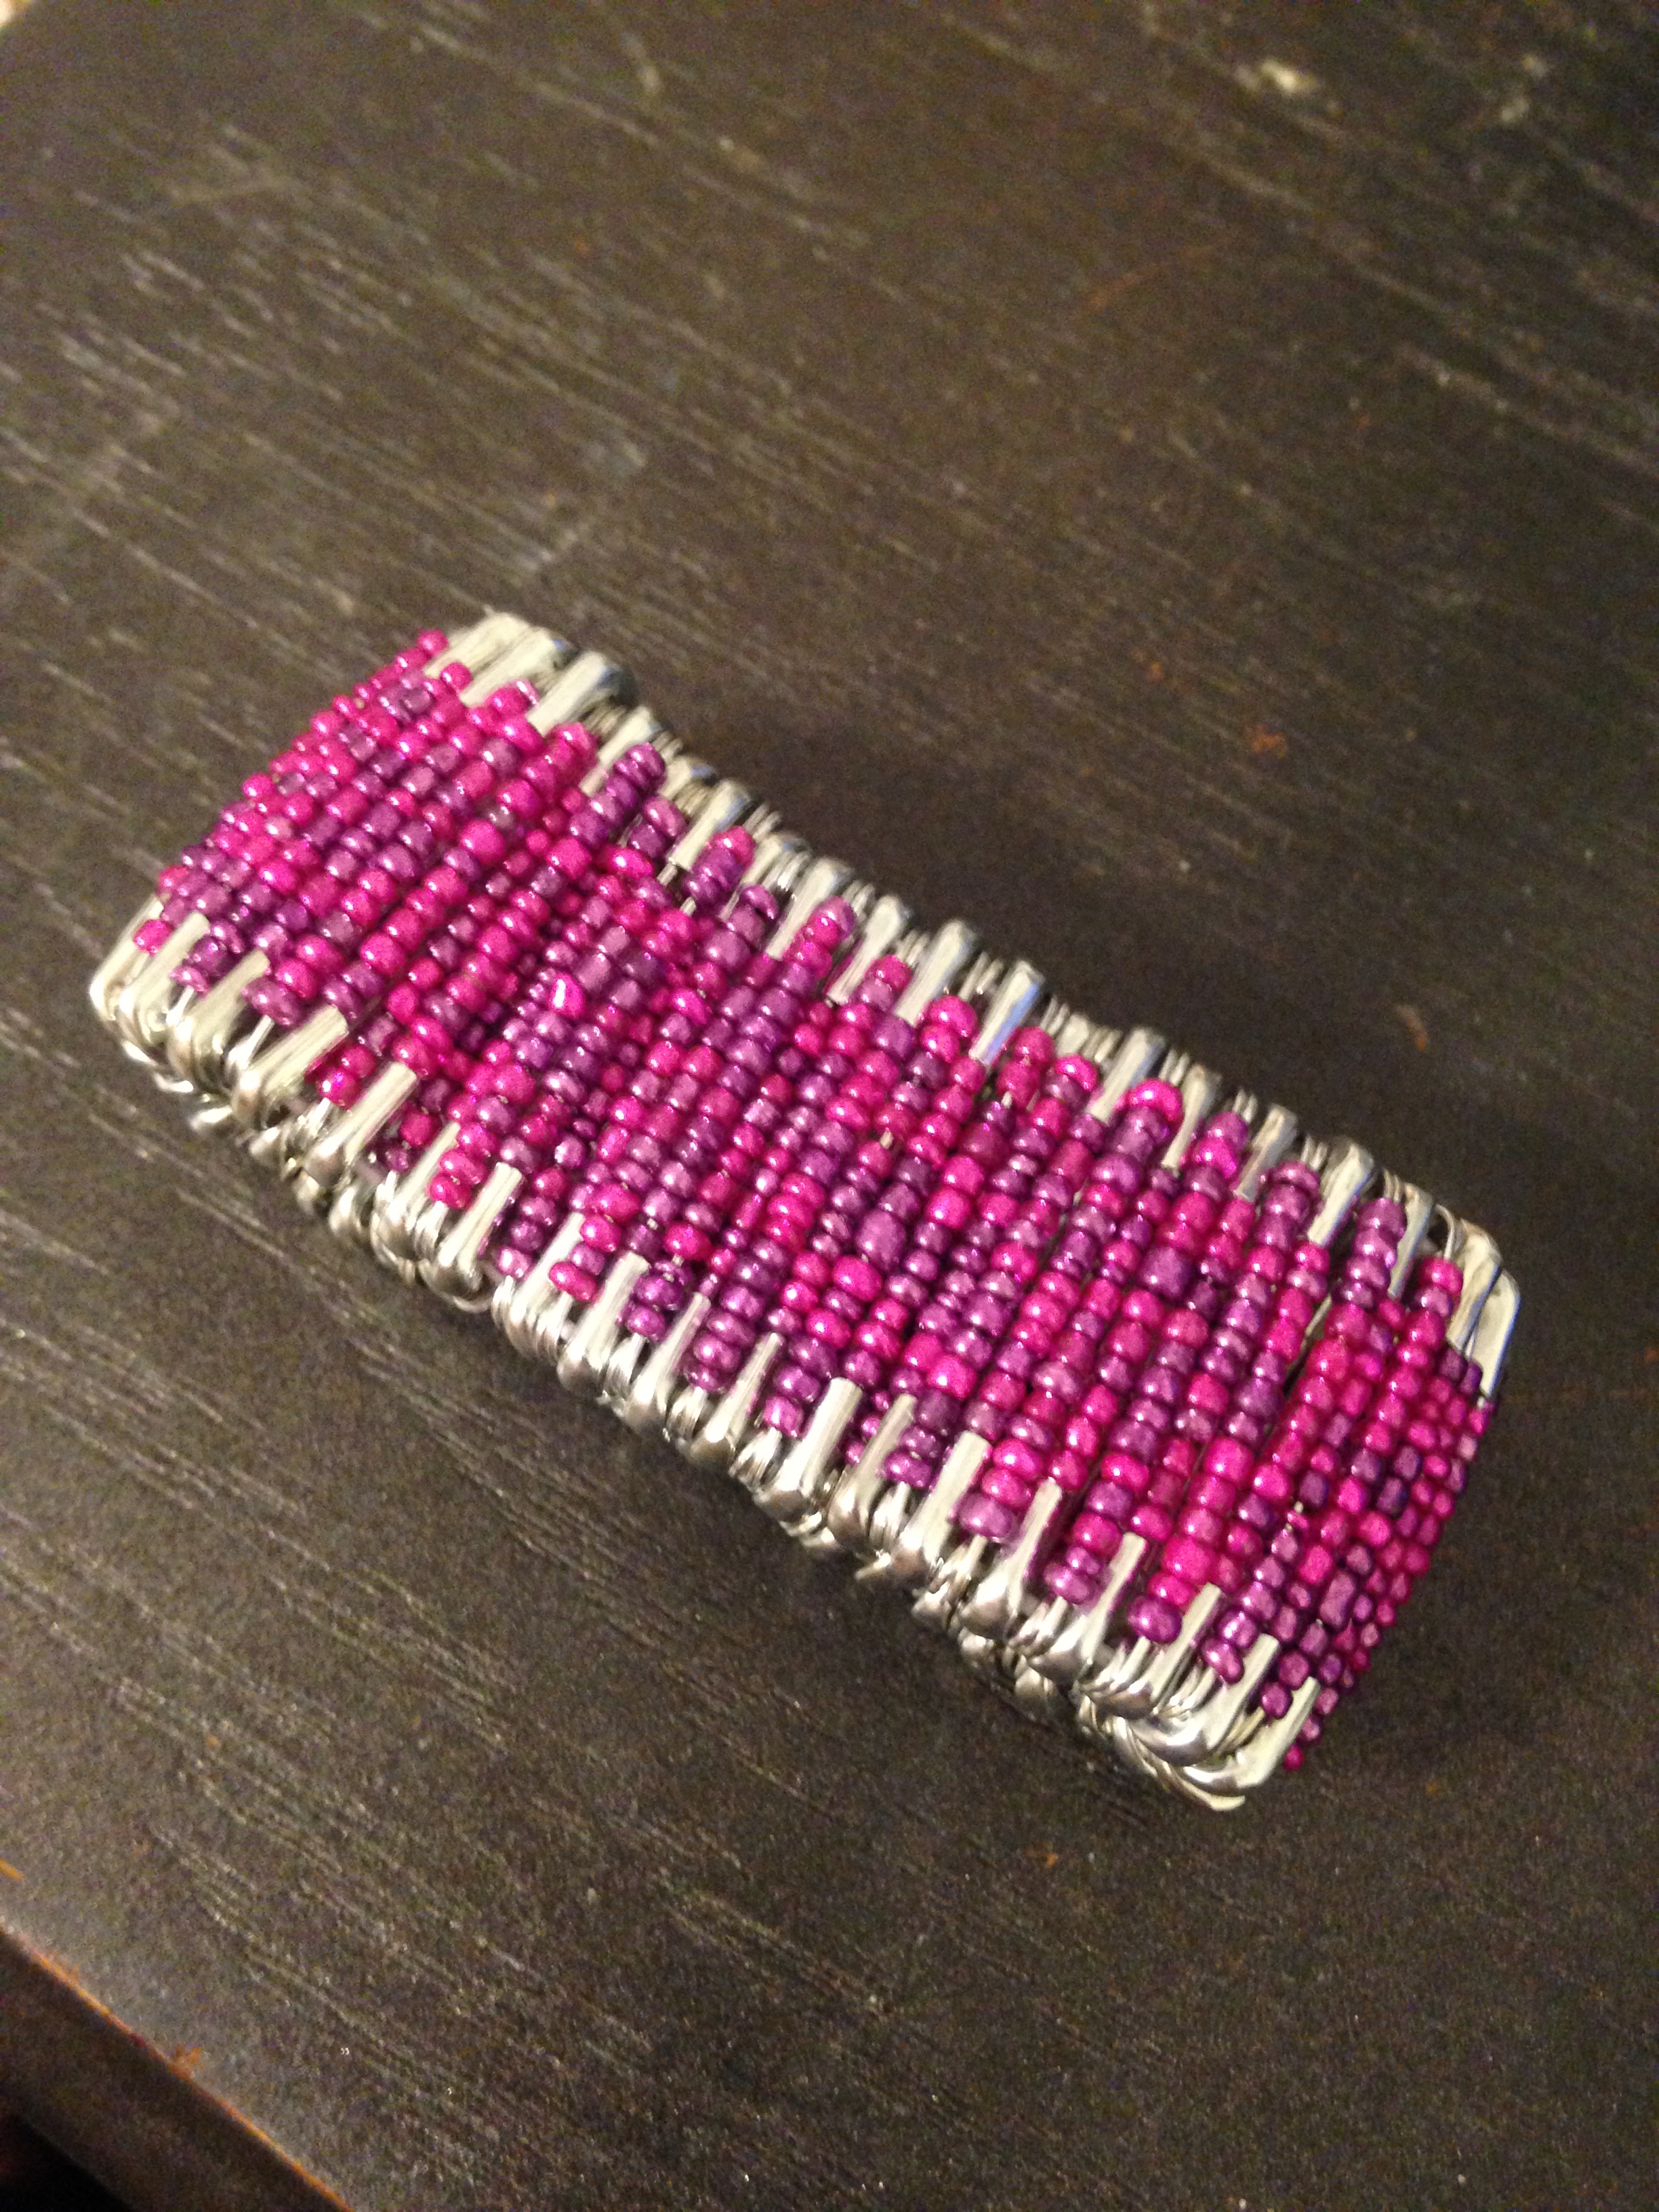 Pin on Bracelet beads